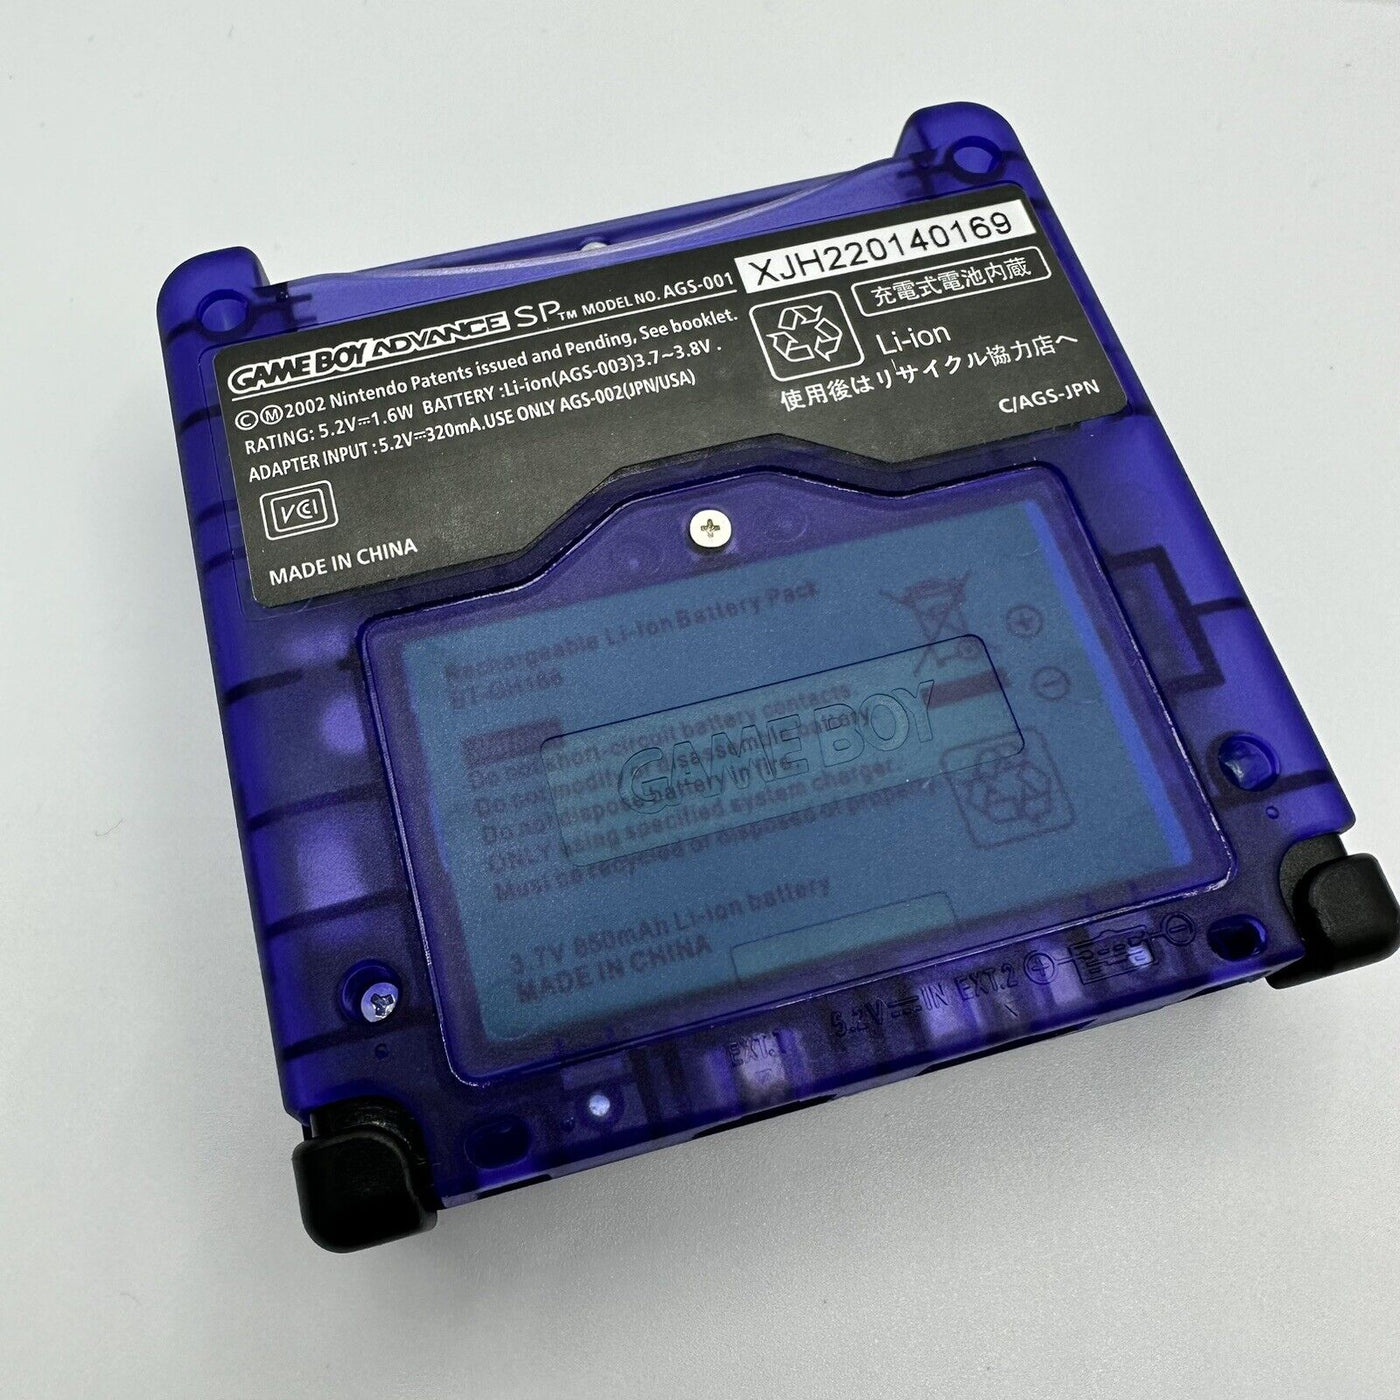 Game Boy Advance SP Console - Grape Purple